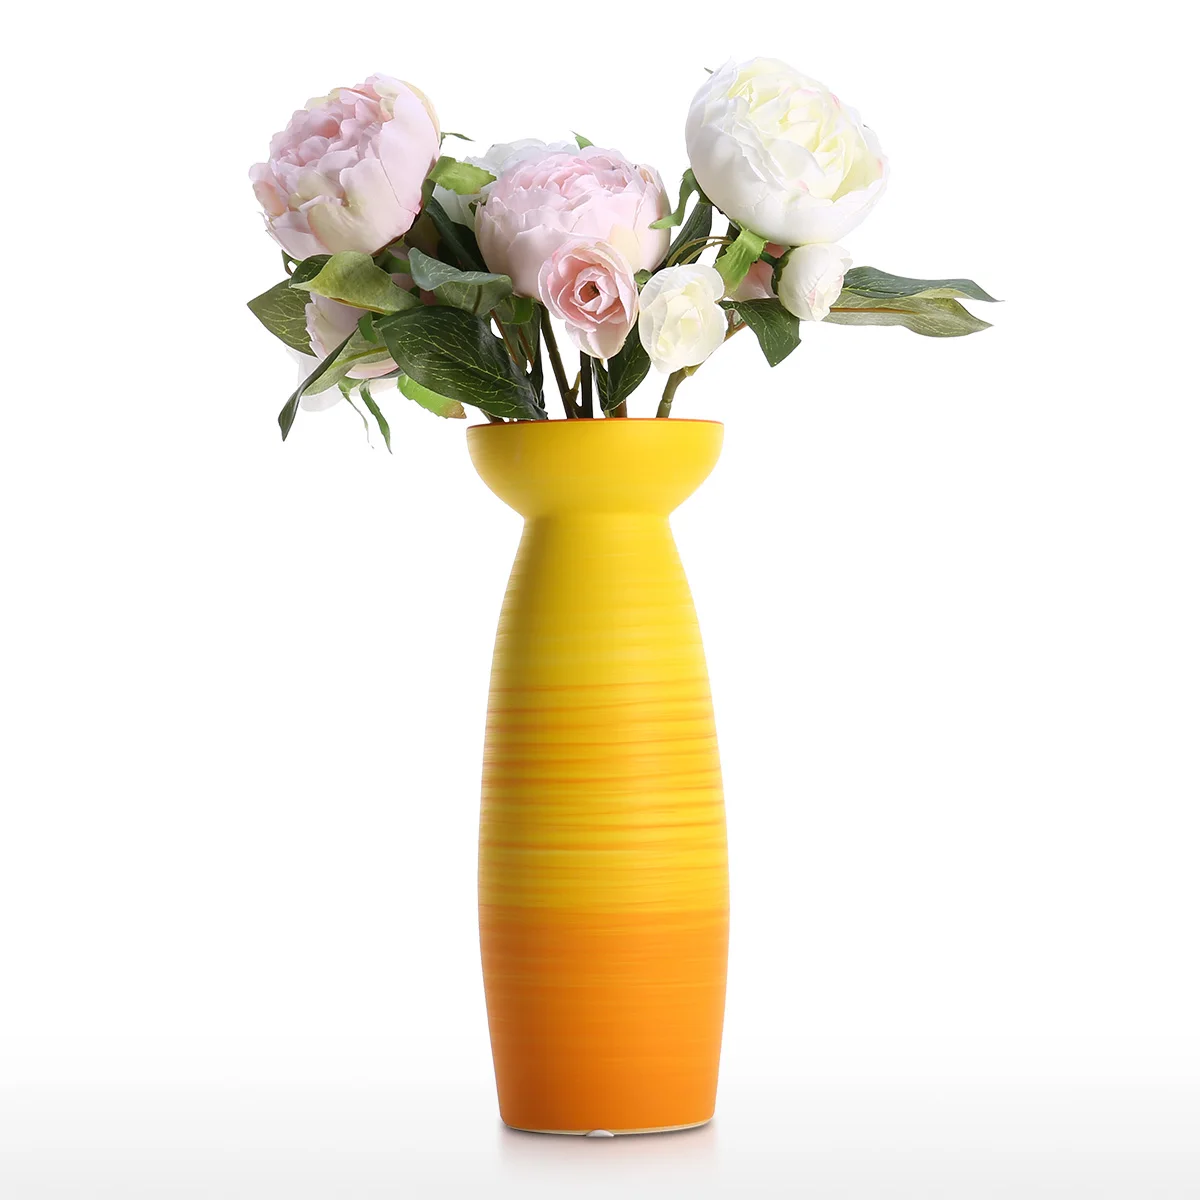 Details about   New Dried Flower Vase Ceramic Vase Home Office Decoration Flower Arrangement 